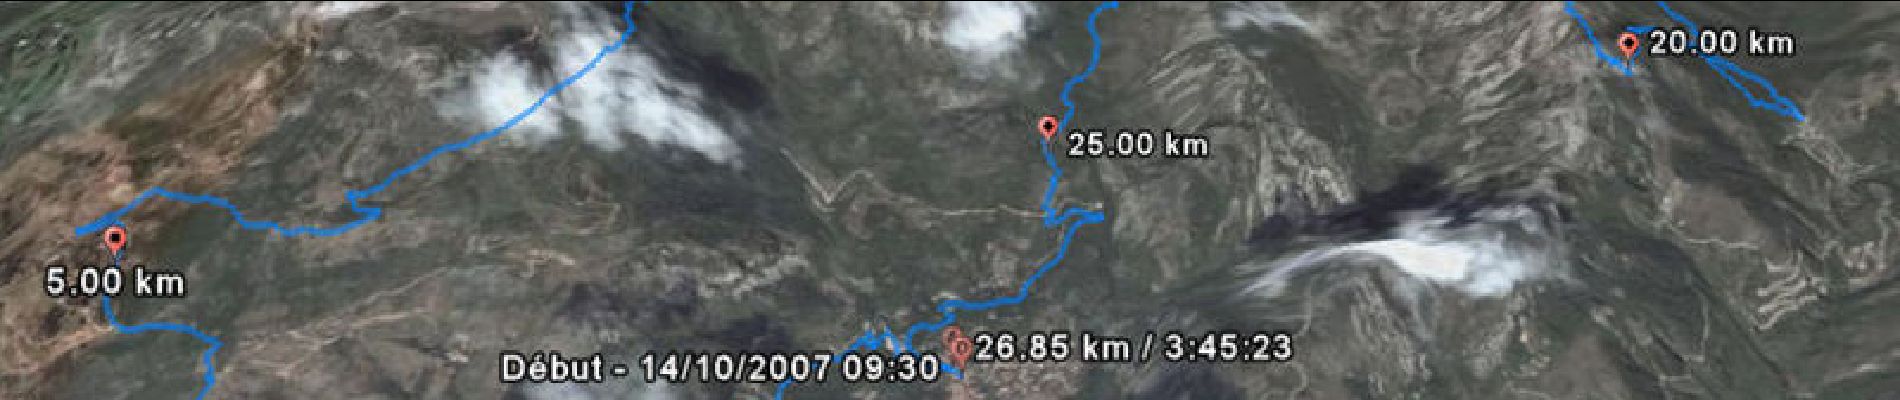 Tour Laufen Gorbio - Trail de Gorbio 32km 2007 - Photo